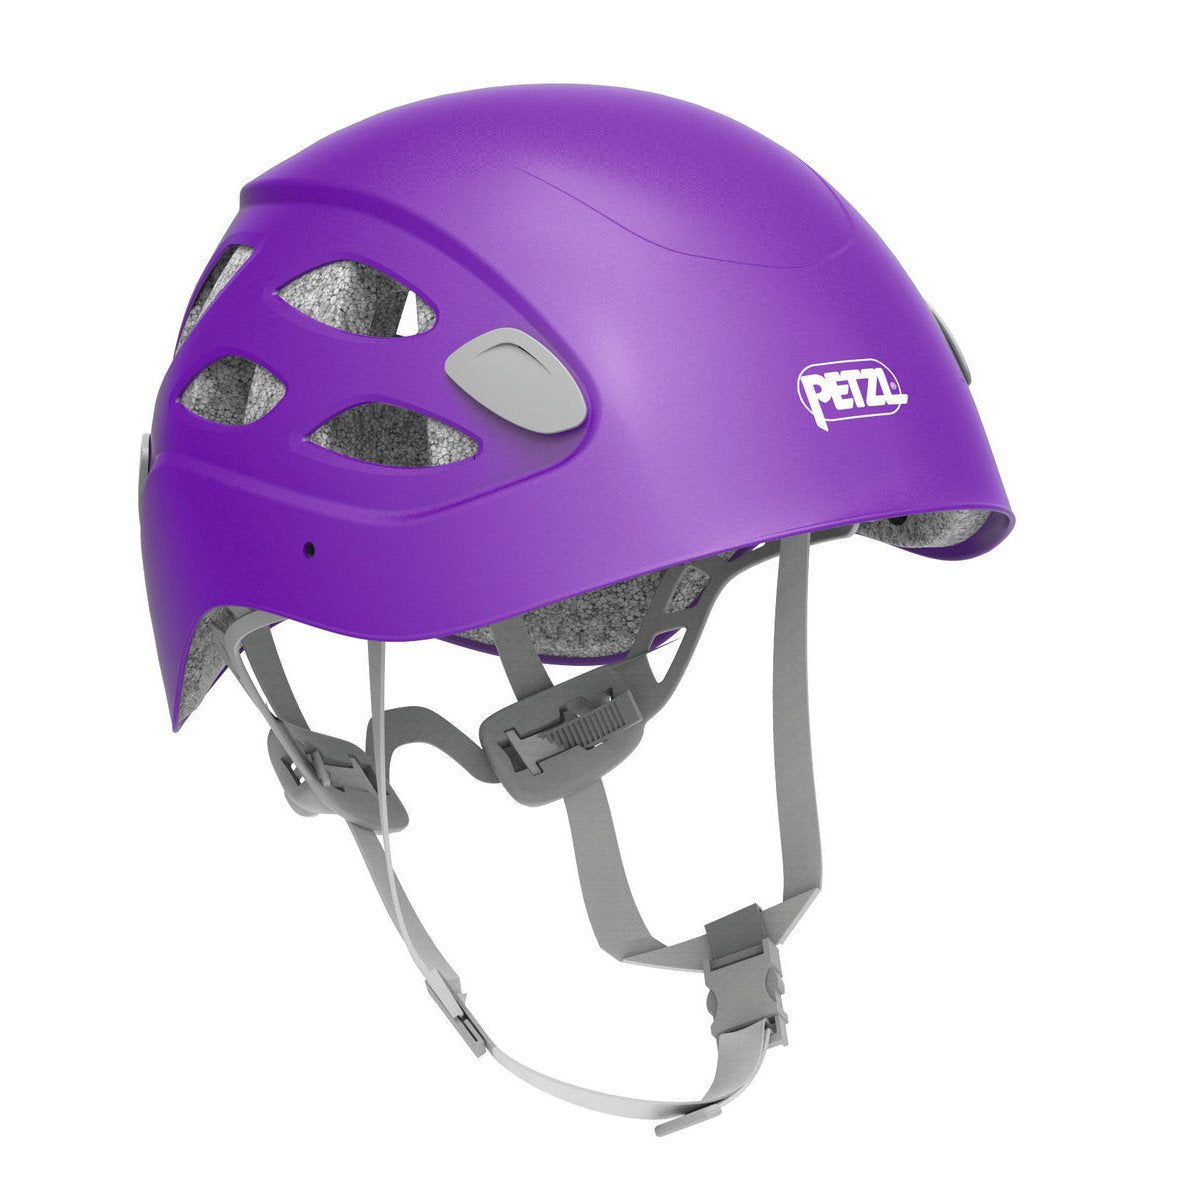 Petzl Borea multi-sport helmet, front/side view in purple colour